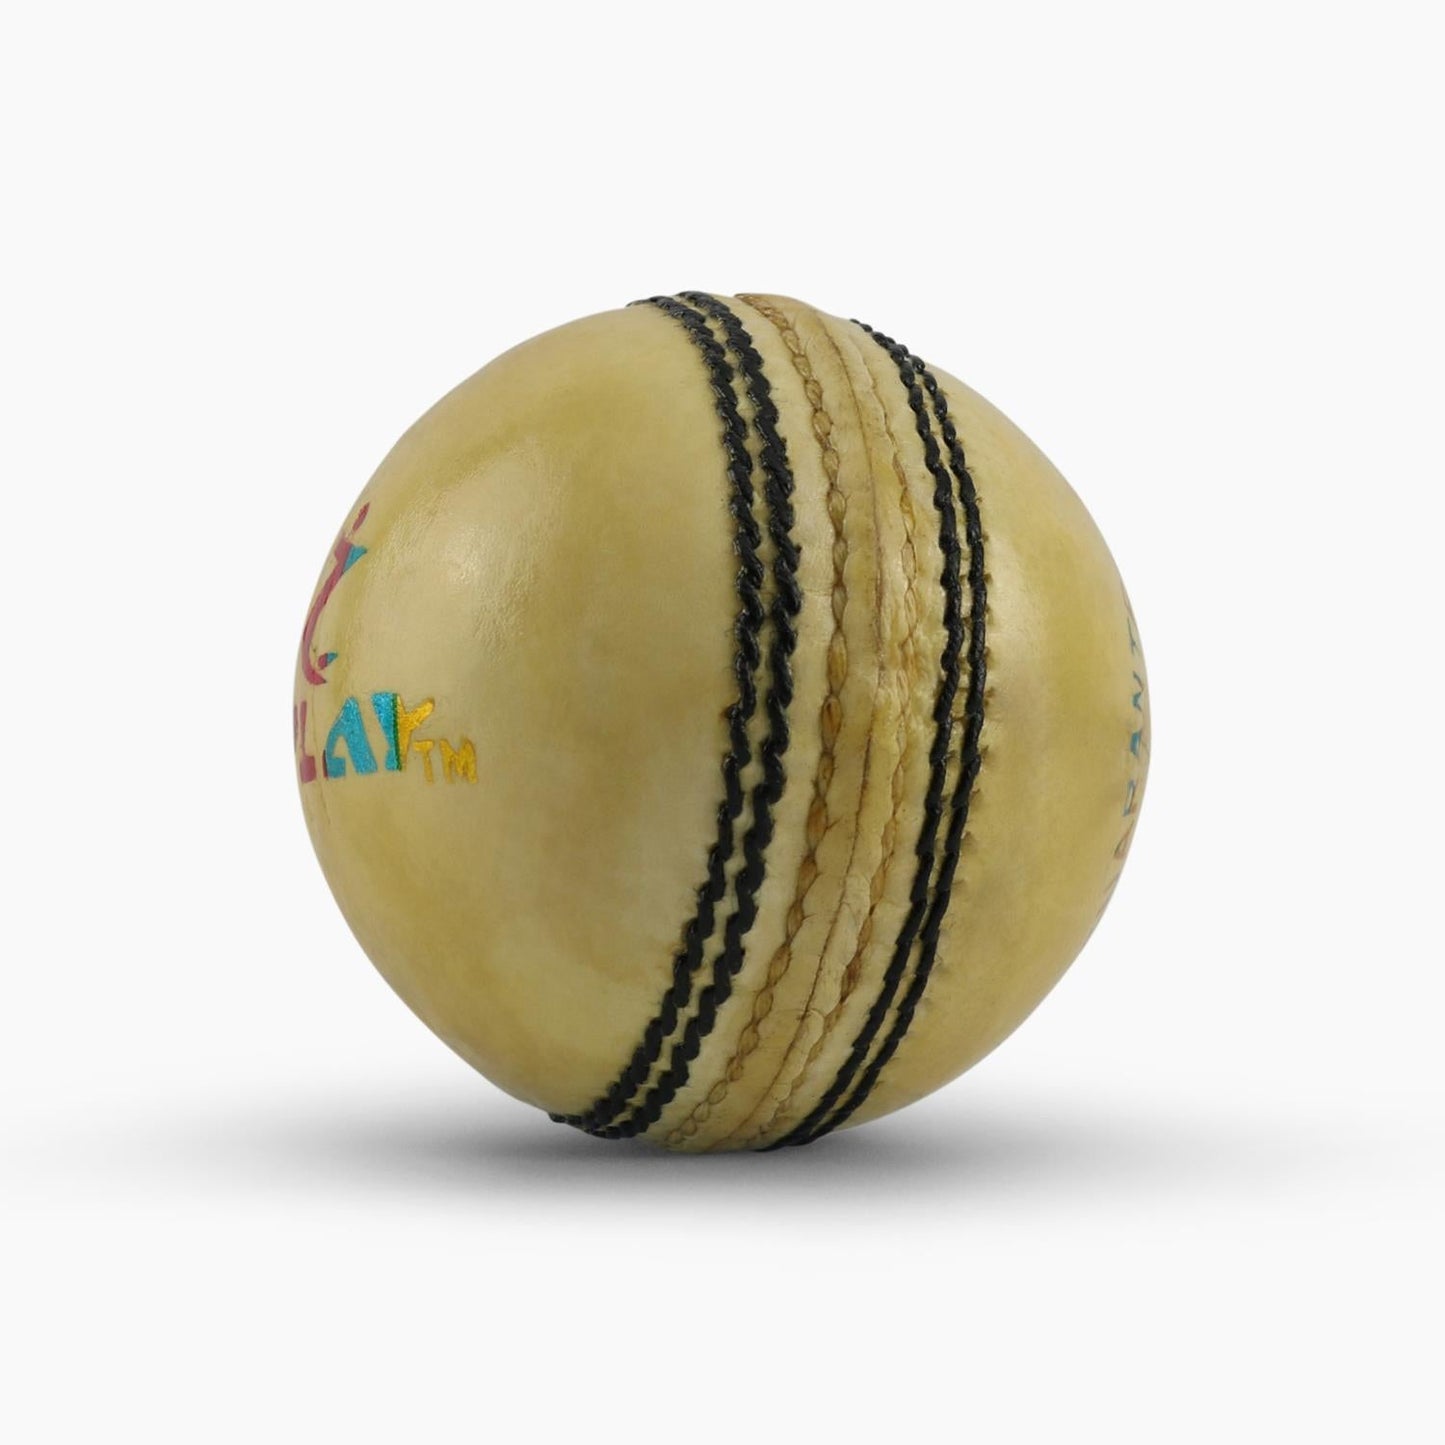 Buy Splay Club Cricket Ball-Cricket Ball-Splay-Splay UK Online